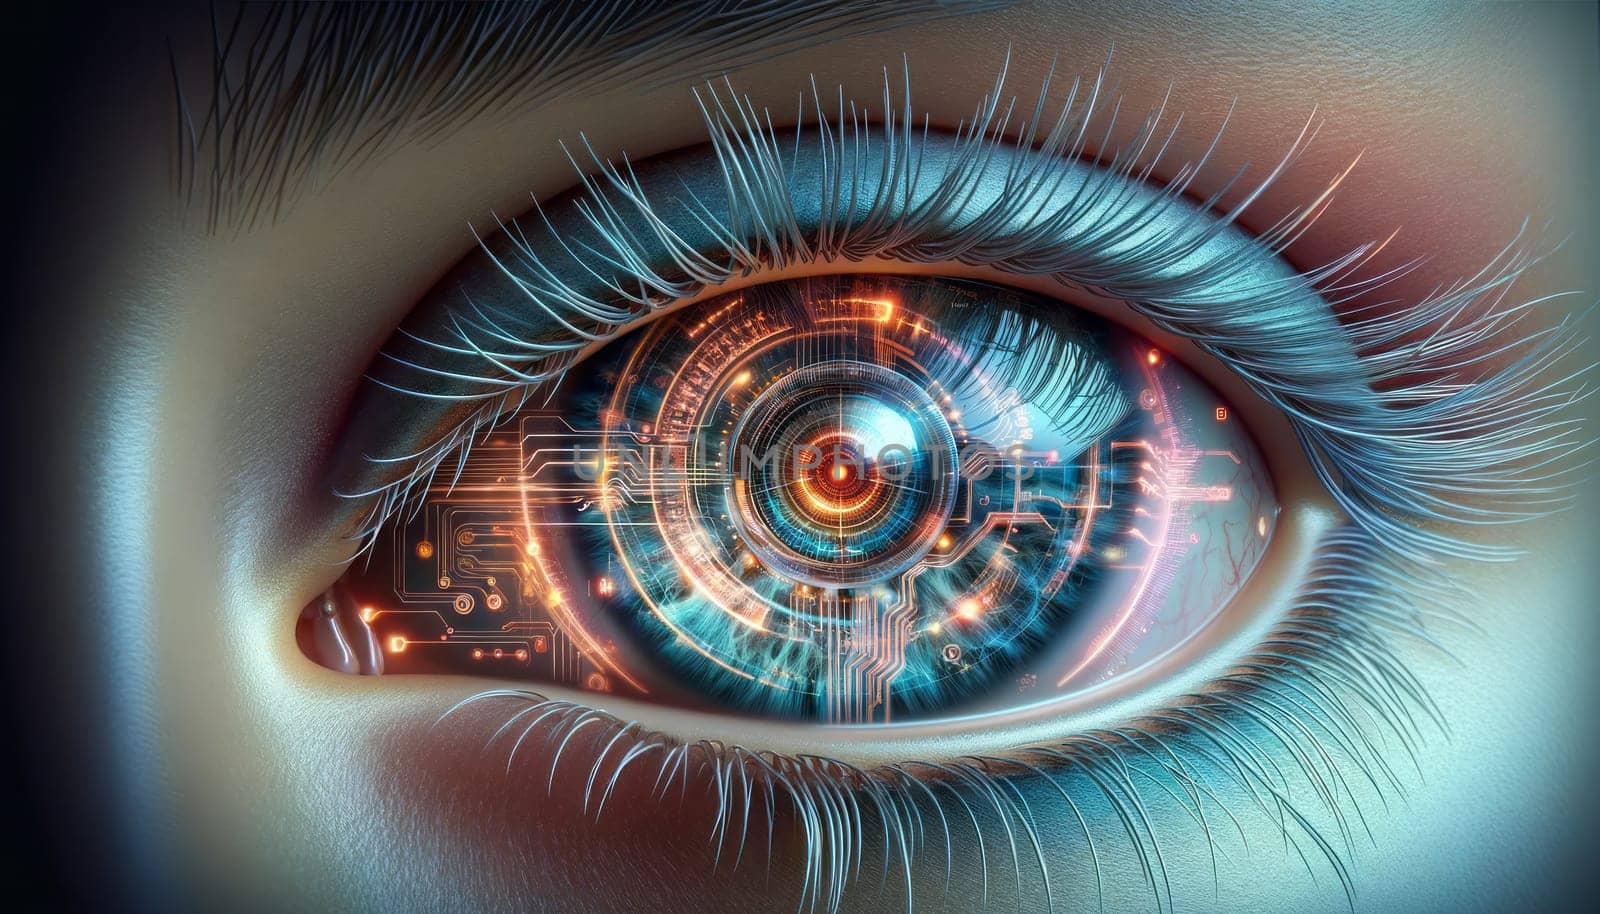 A close-up digital illustration of a human eye by nkotlyar